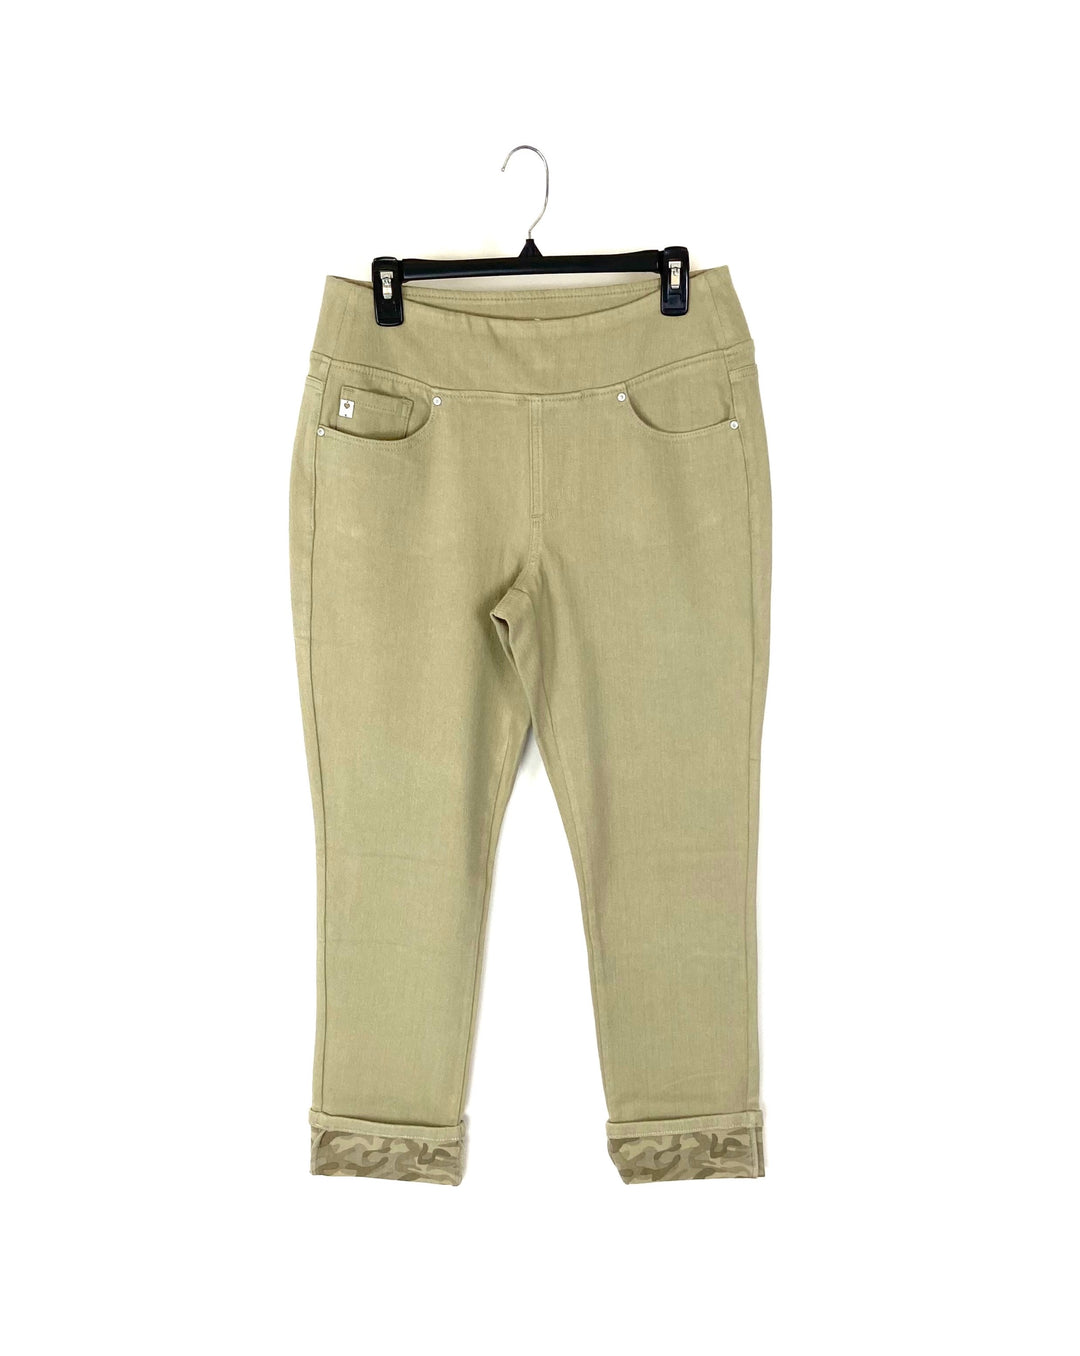 Dark Khaki Camo Print Cuff Pants - Size 12/14